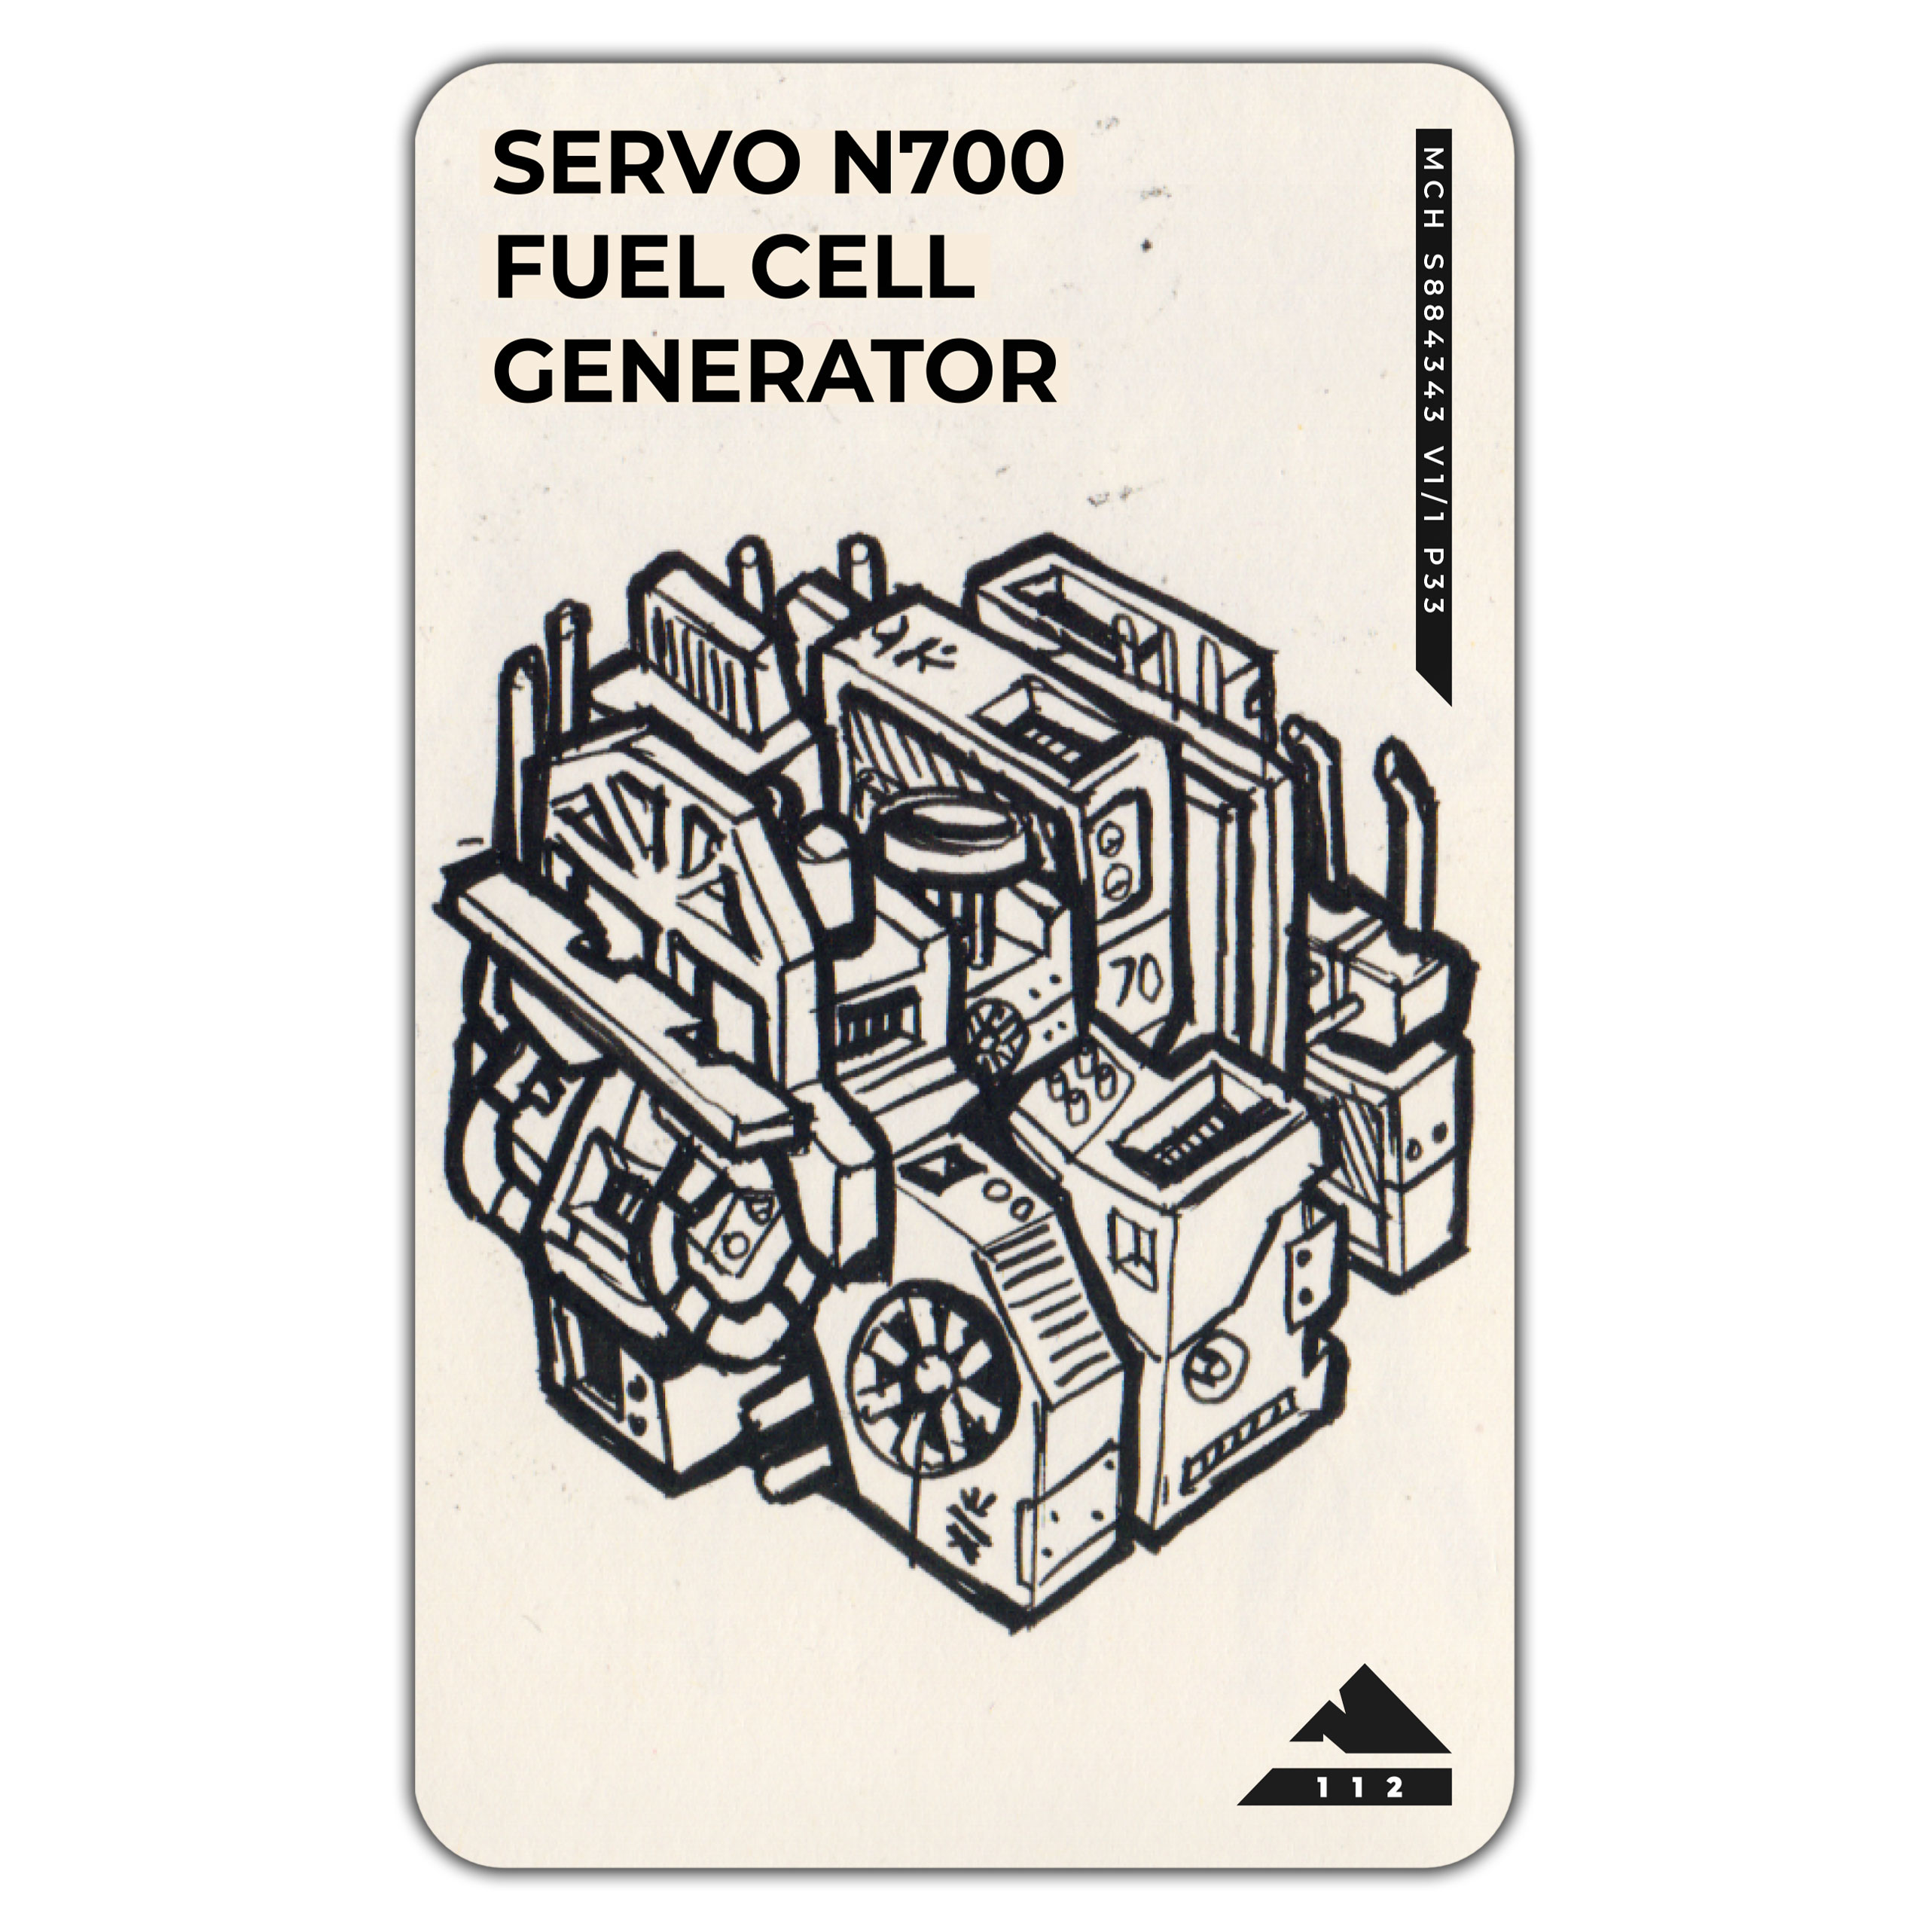 SERVO N700 FUEL CELL GENERATOR [ 1 1 2 ] ~ MCH S884343 V1/1 P33